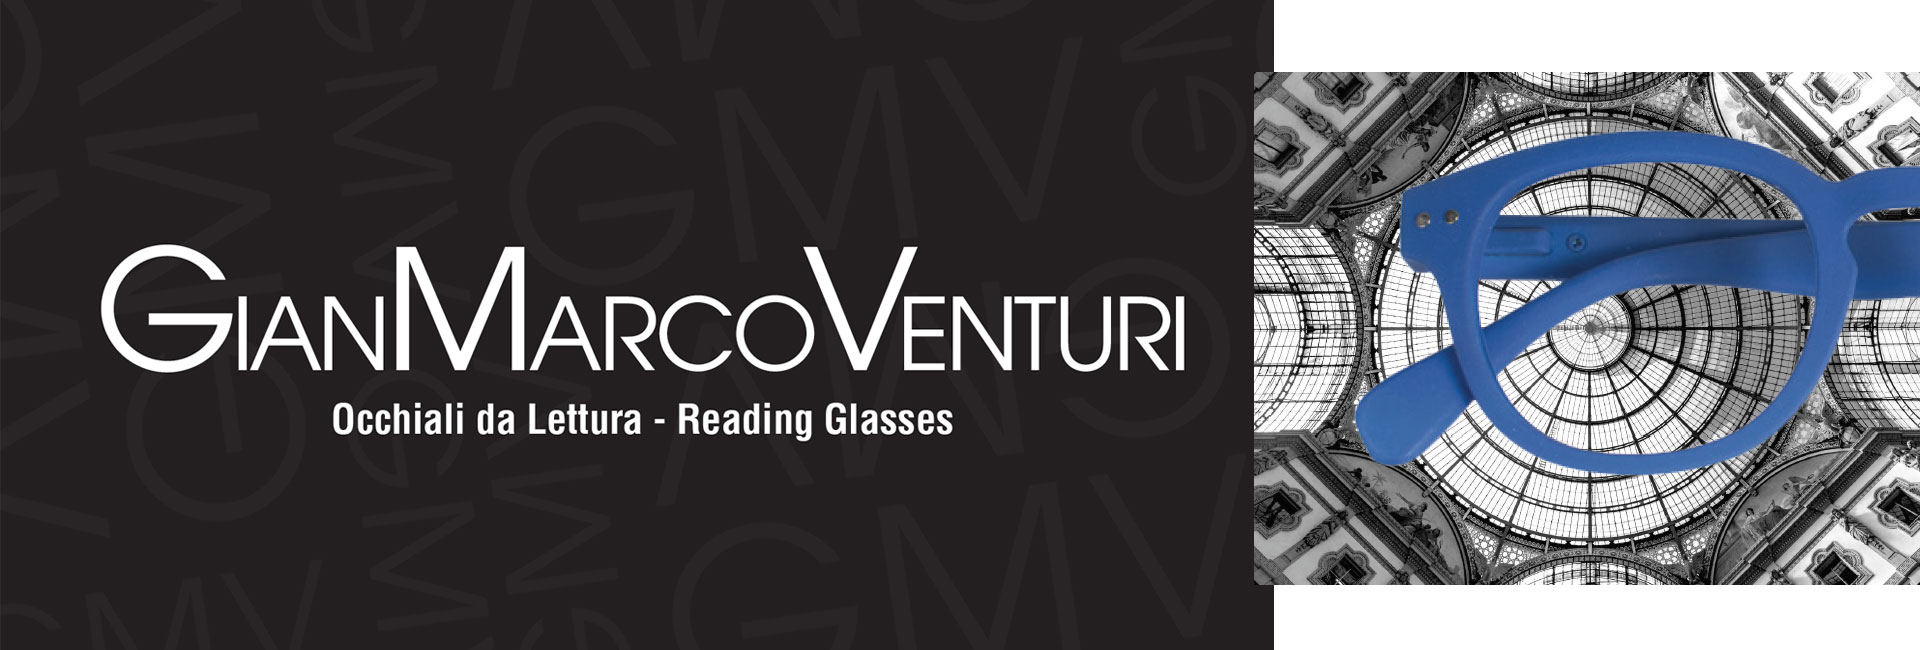 Gian Marco Venturi occhiali da lettura